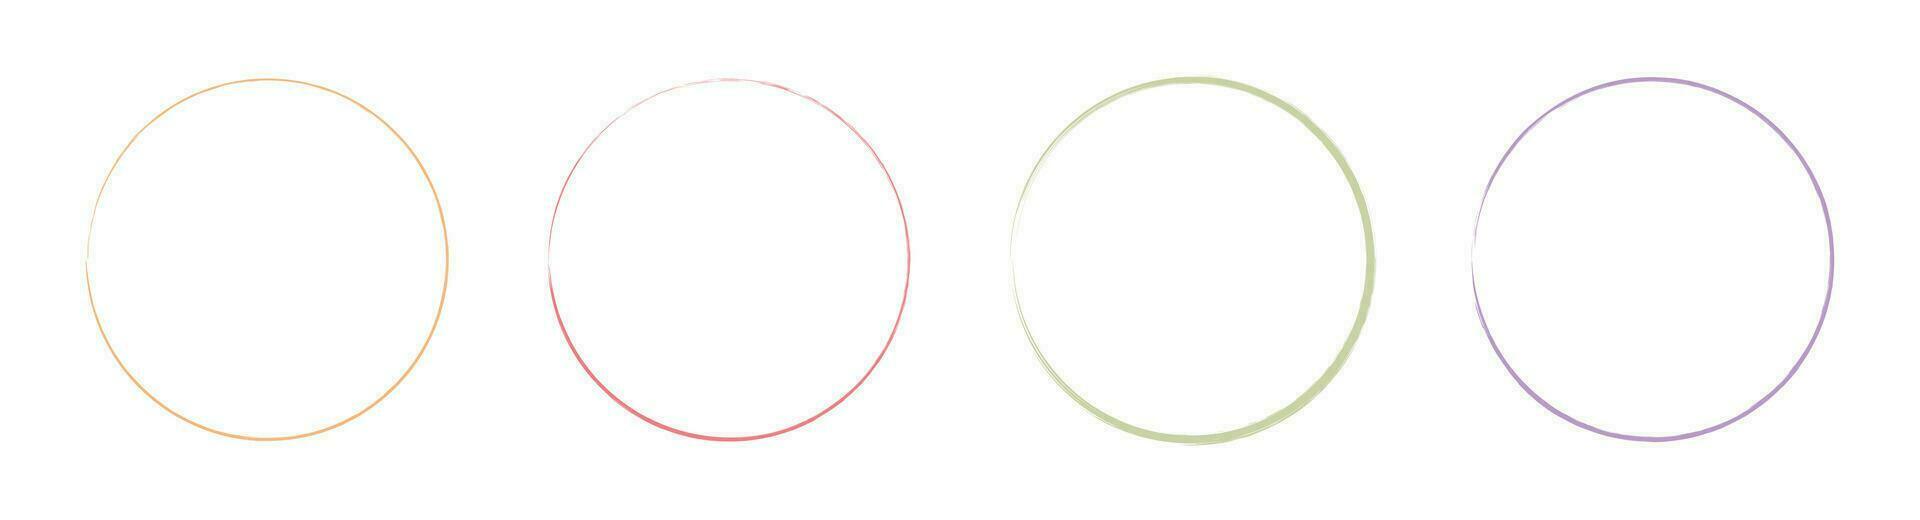 gekleurde grunge cirkel borstel. inkt kader reeks vector illustratie